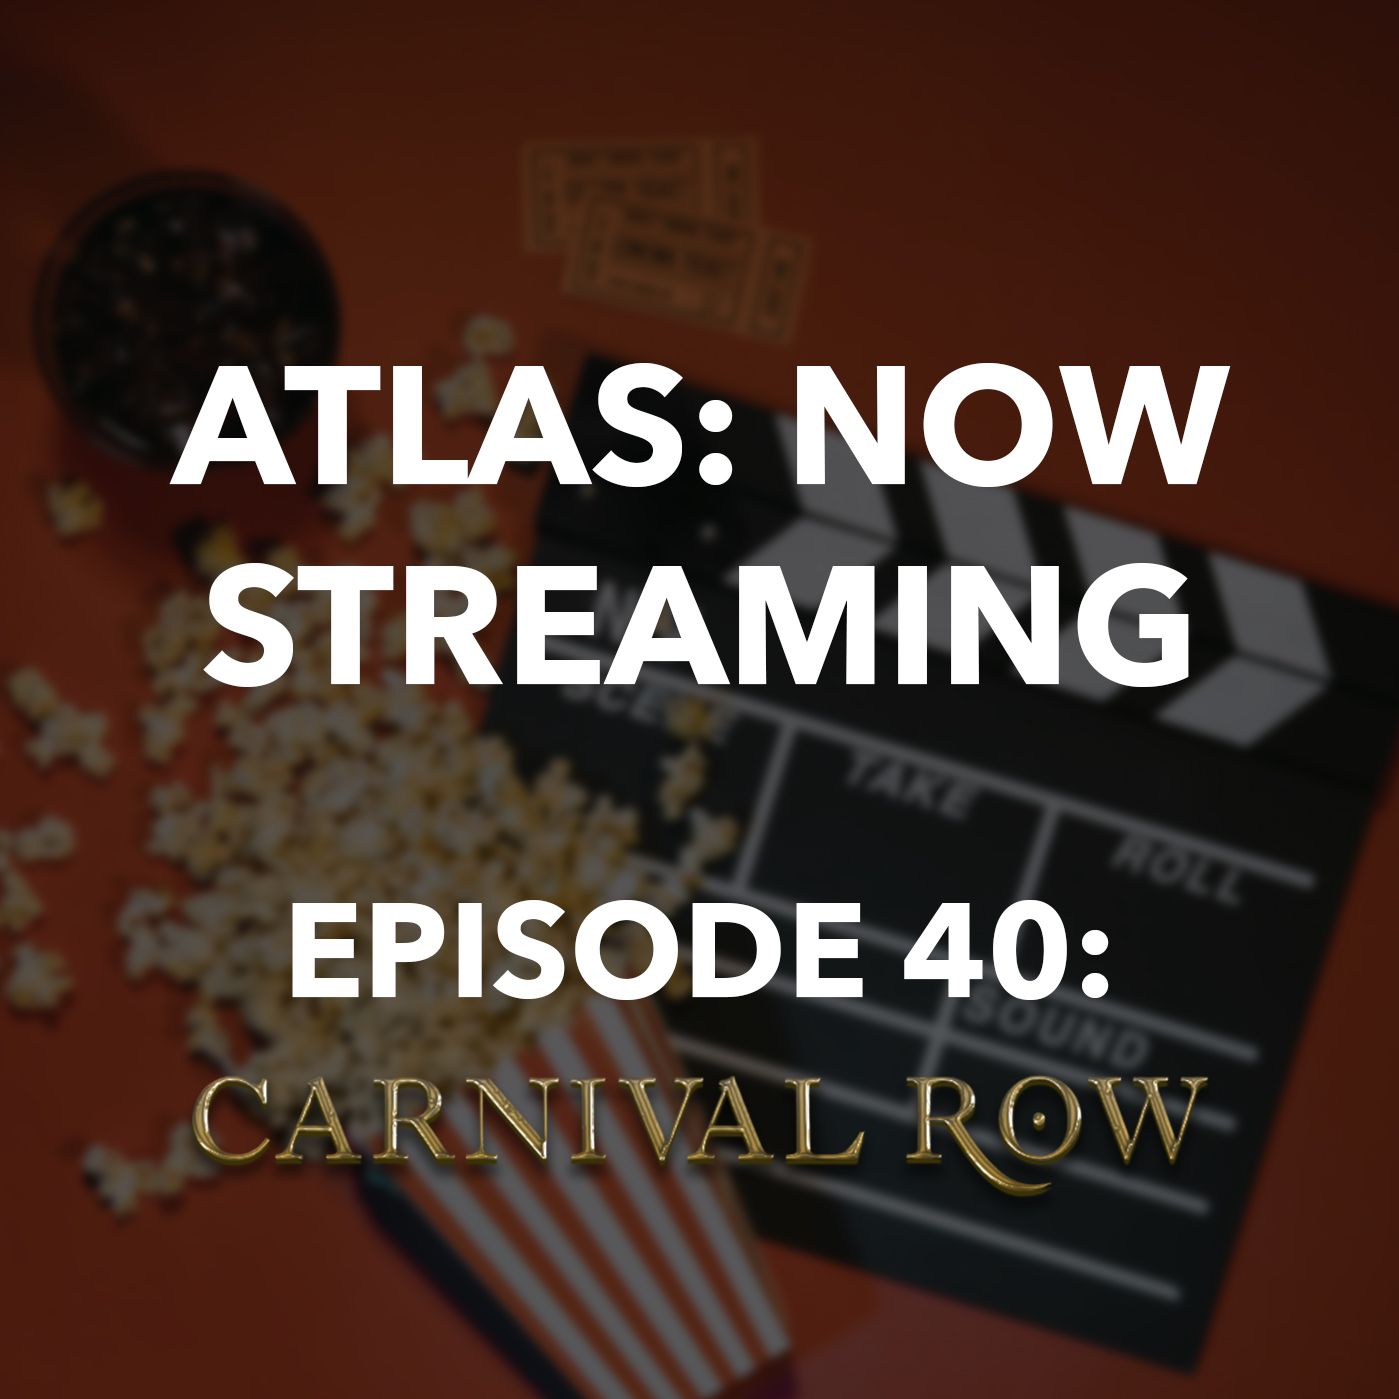 Carnival Row - Atlas: Now Streaming Episode 40